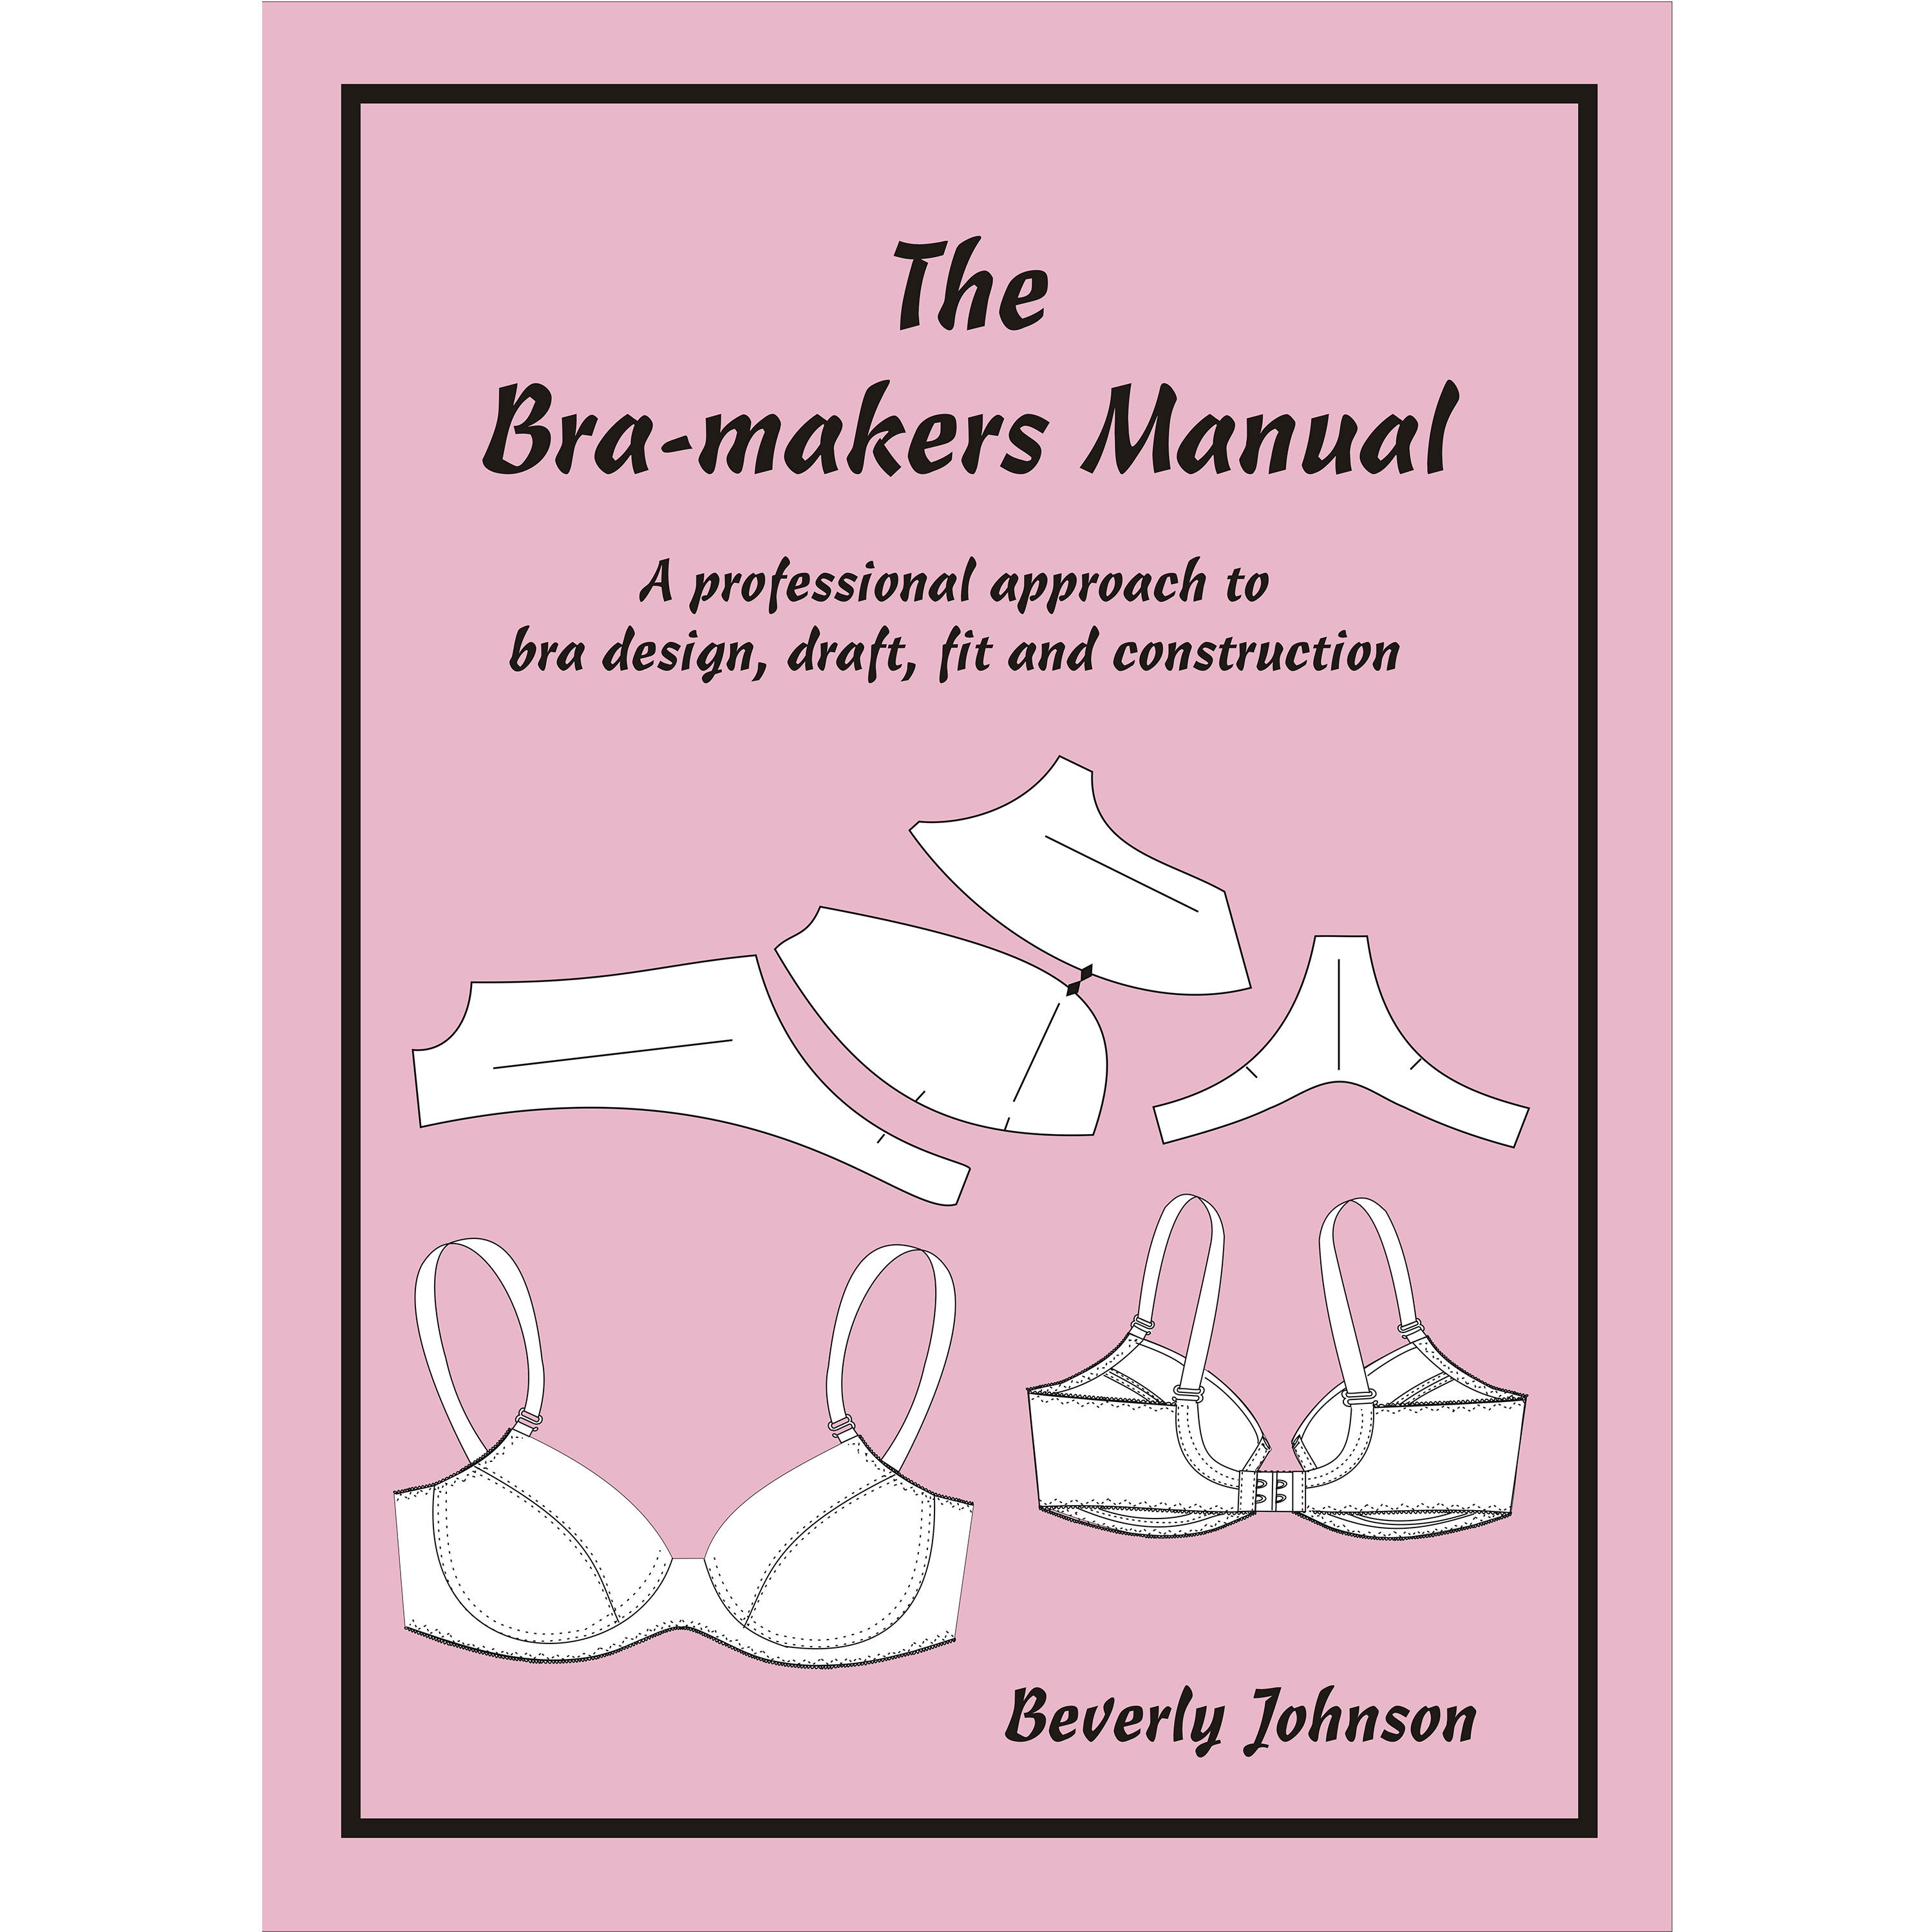 https://www.braandcorsetsupplies.com/wp-content/uploads/2016/07/bra-makers-manual-from-Bra-Makers-Supply.jpg